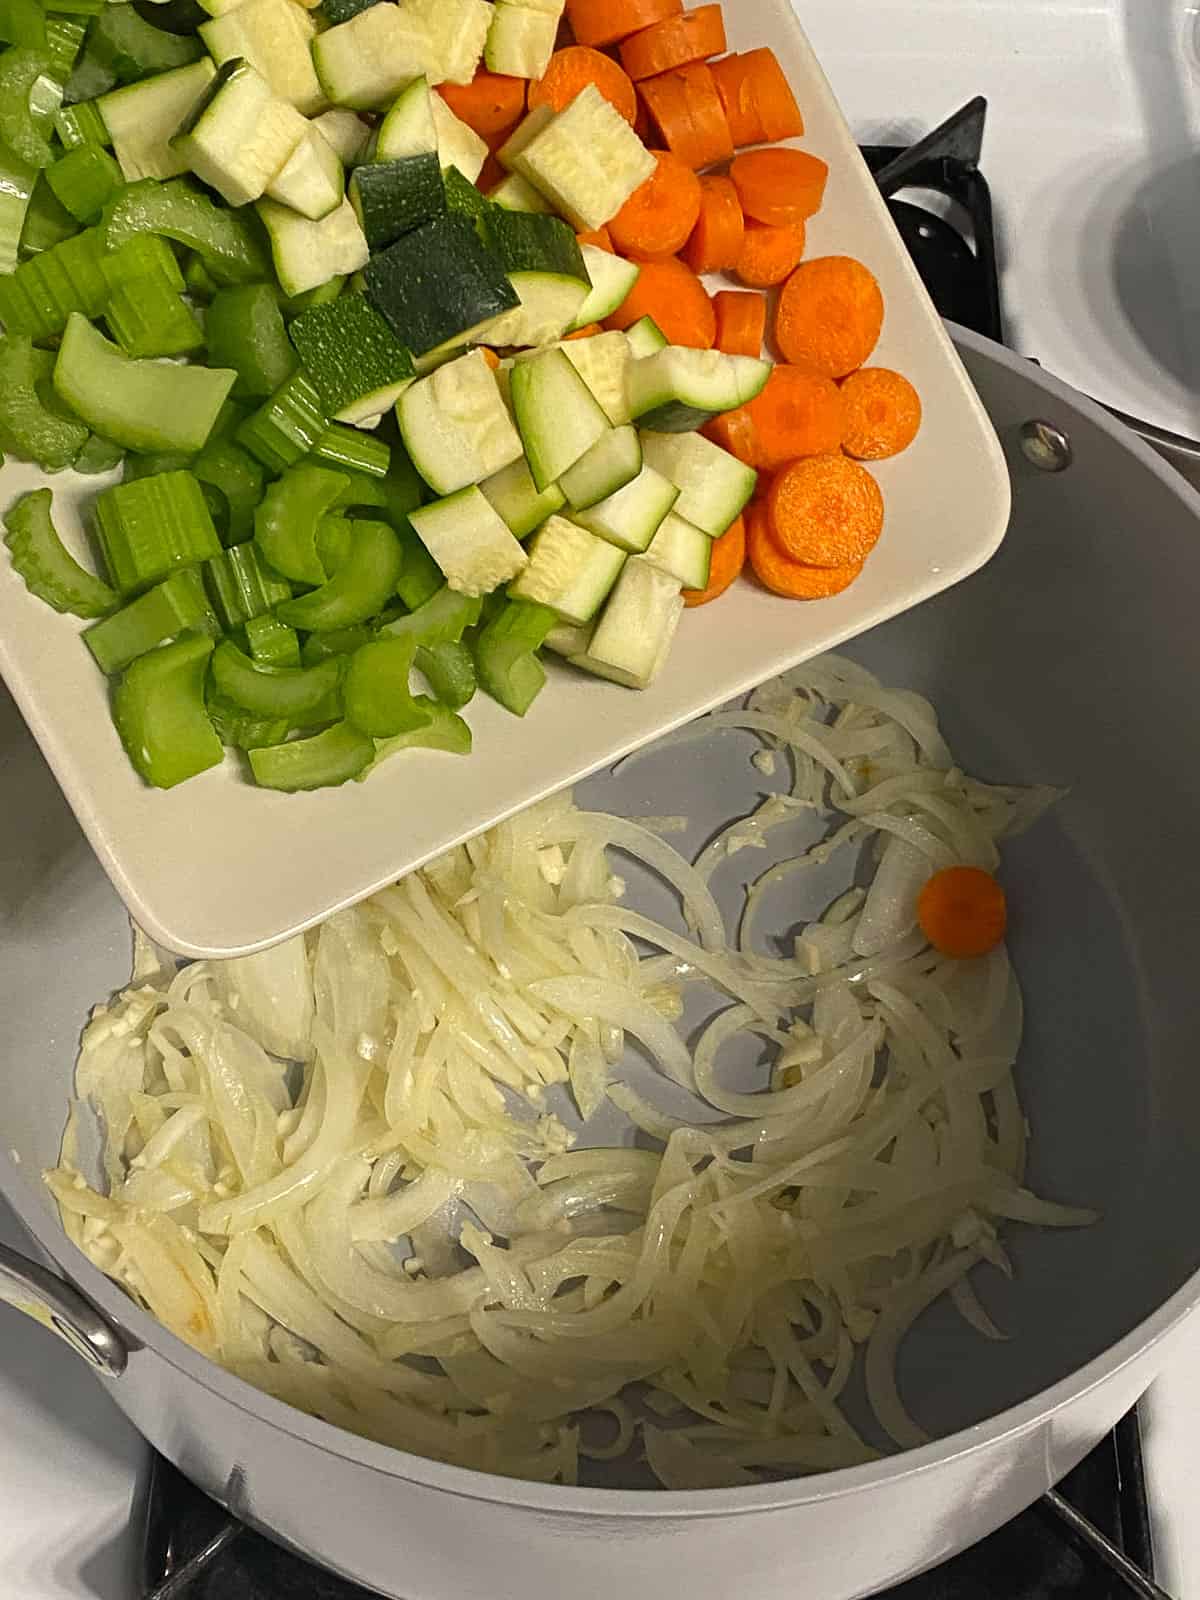 process of adding veggies to pan